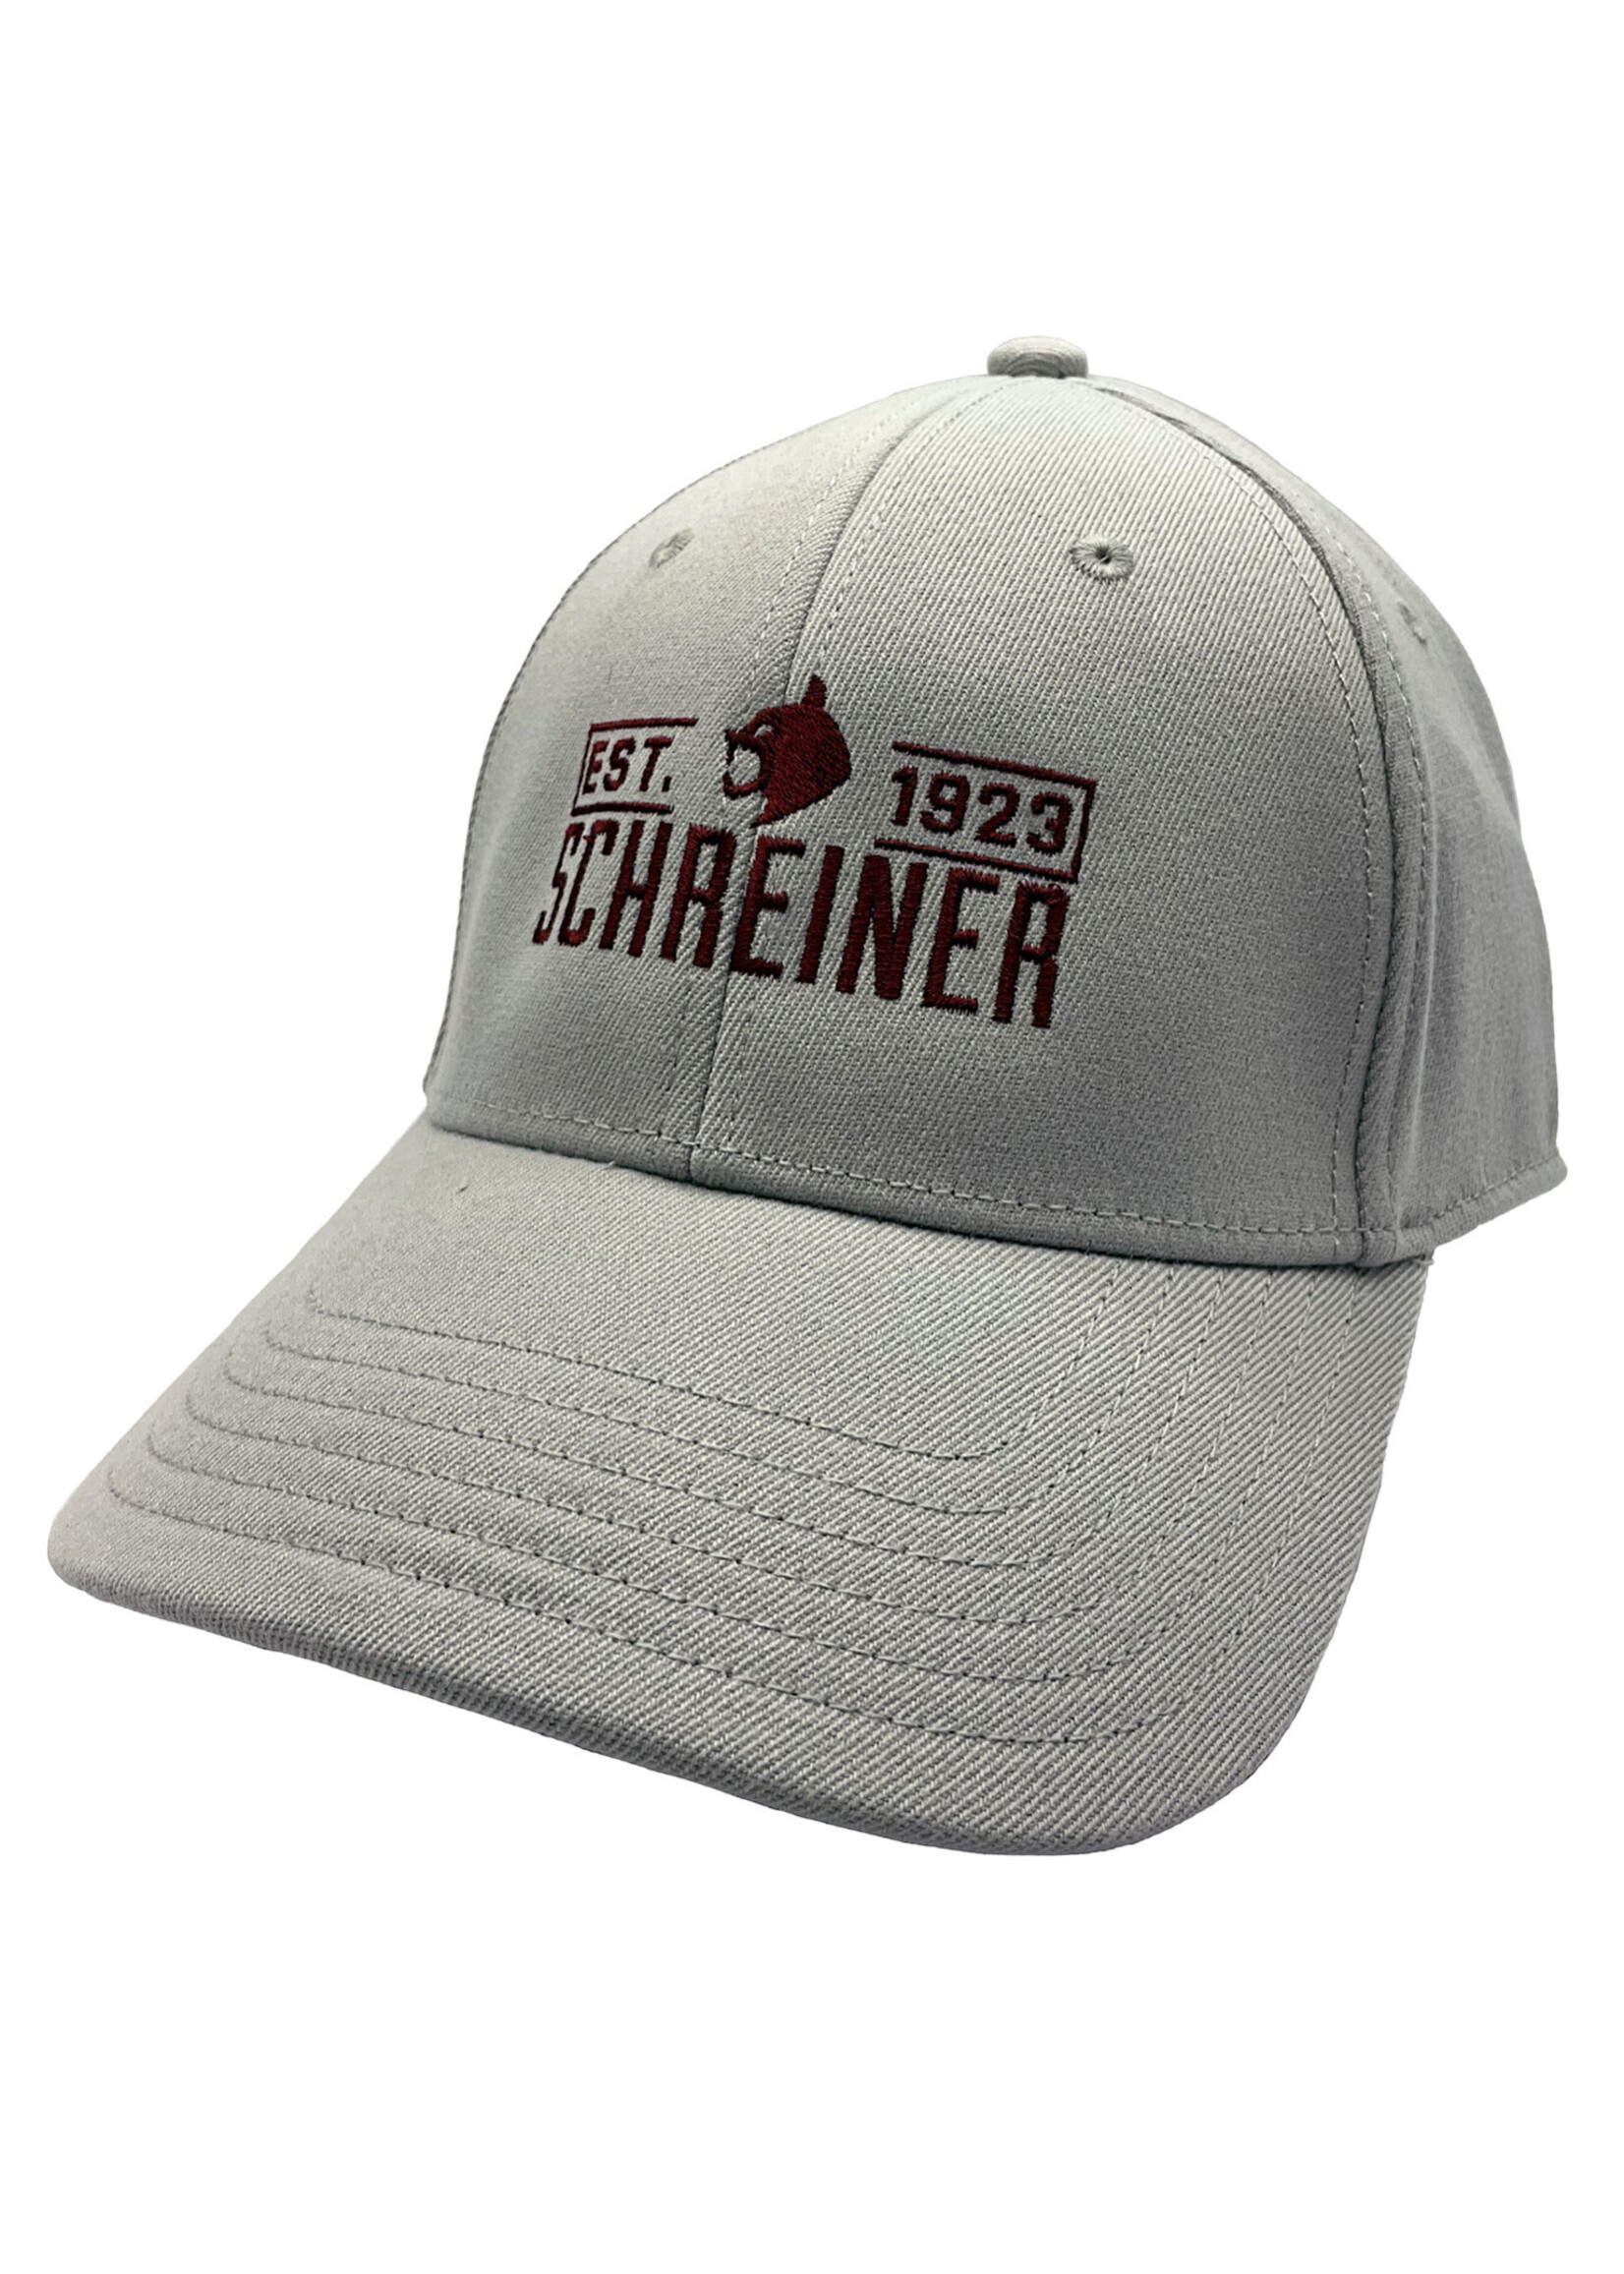 Legacy Legacy Schreiner University Stretch Fit Hat